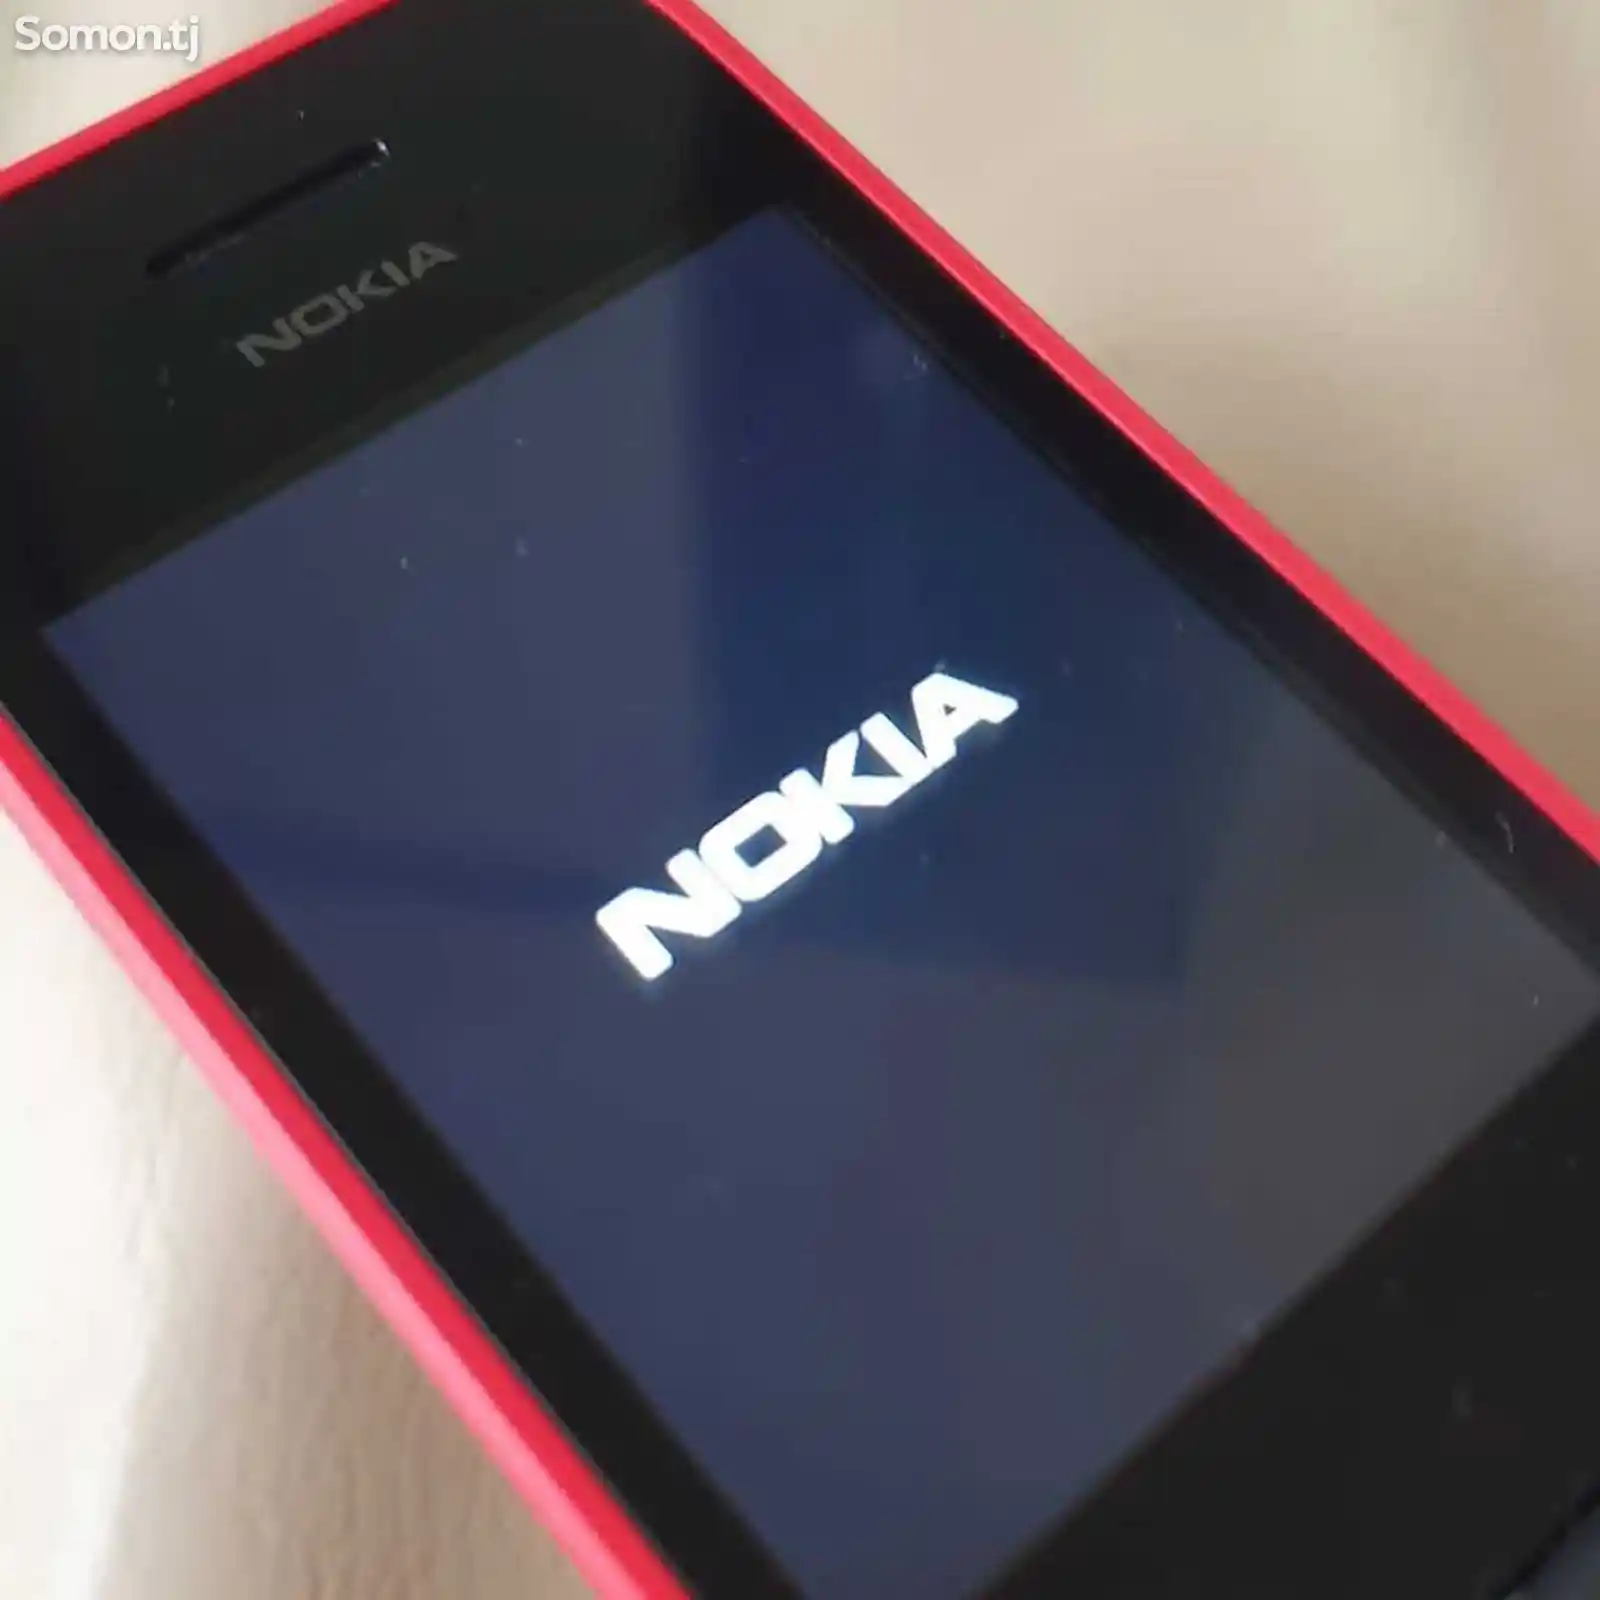 Nokia 2720 Dual sim-2